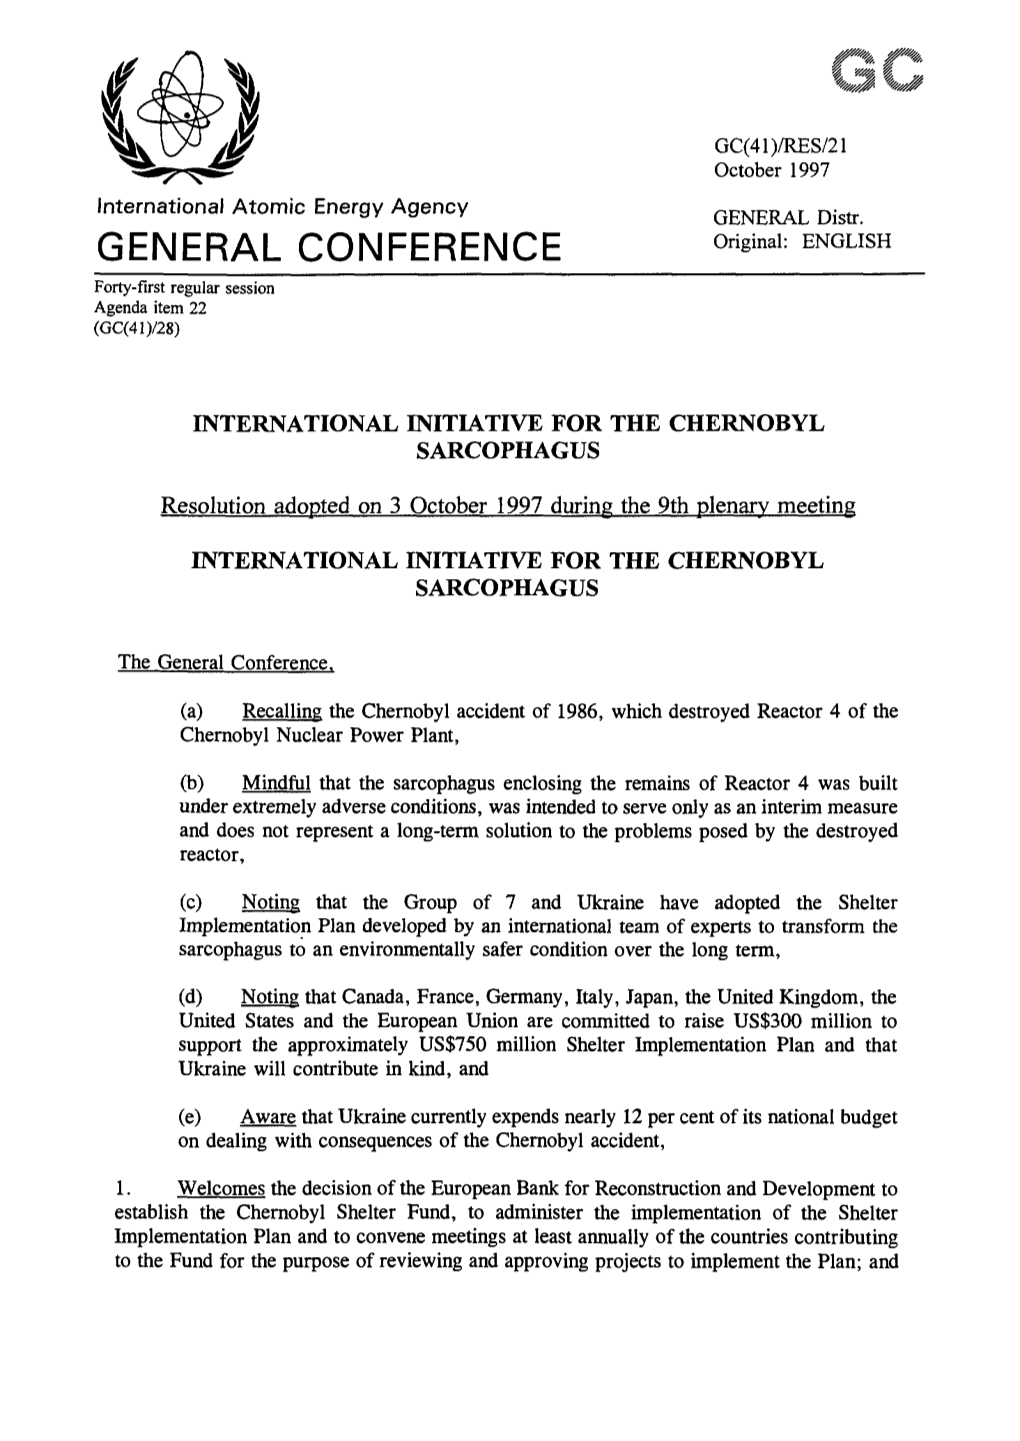 International Initiative for the Chernobyl